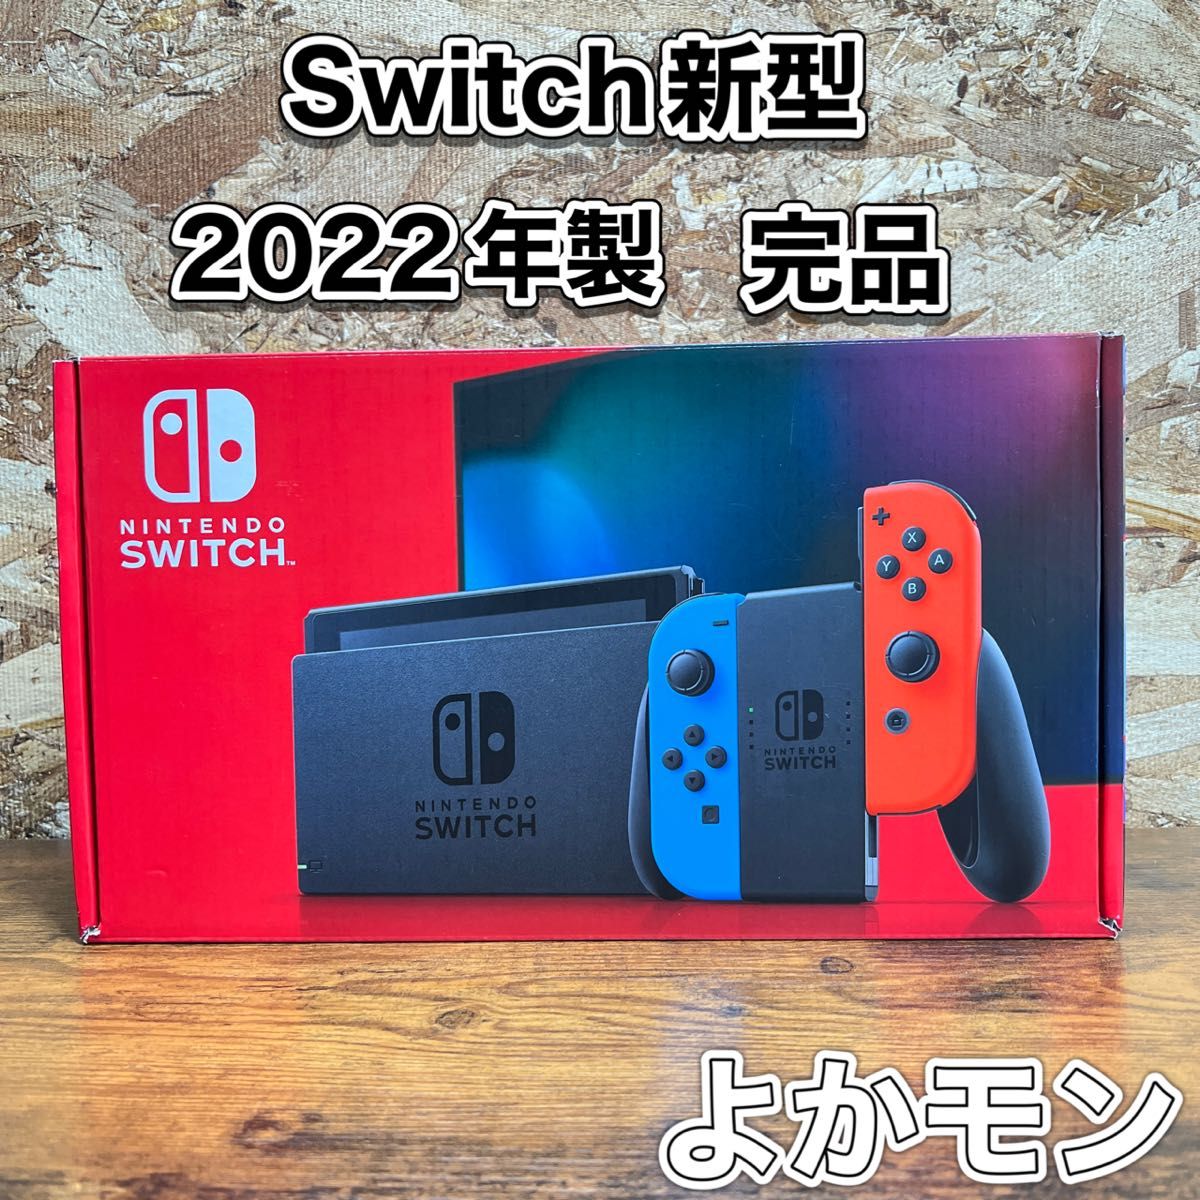 Nintendo Switch バッテリー強化版 2022年-